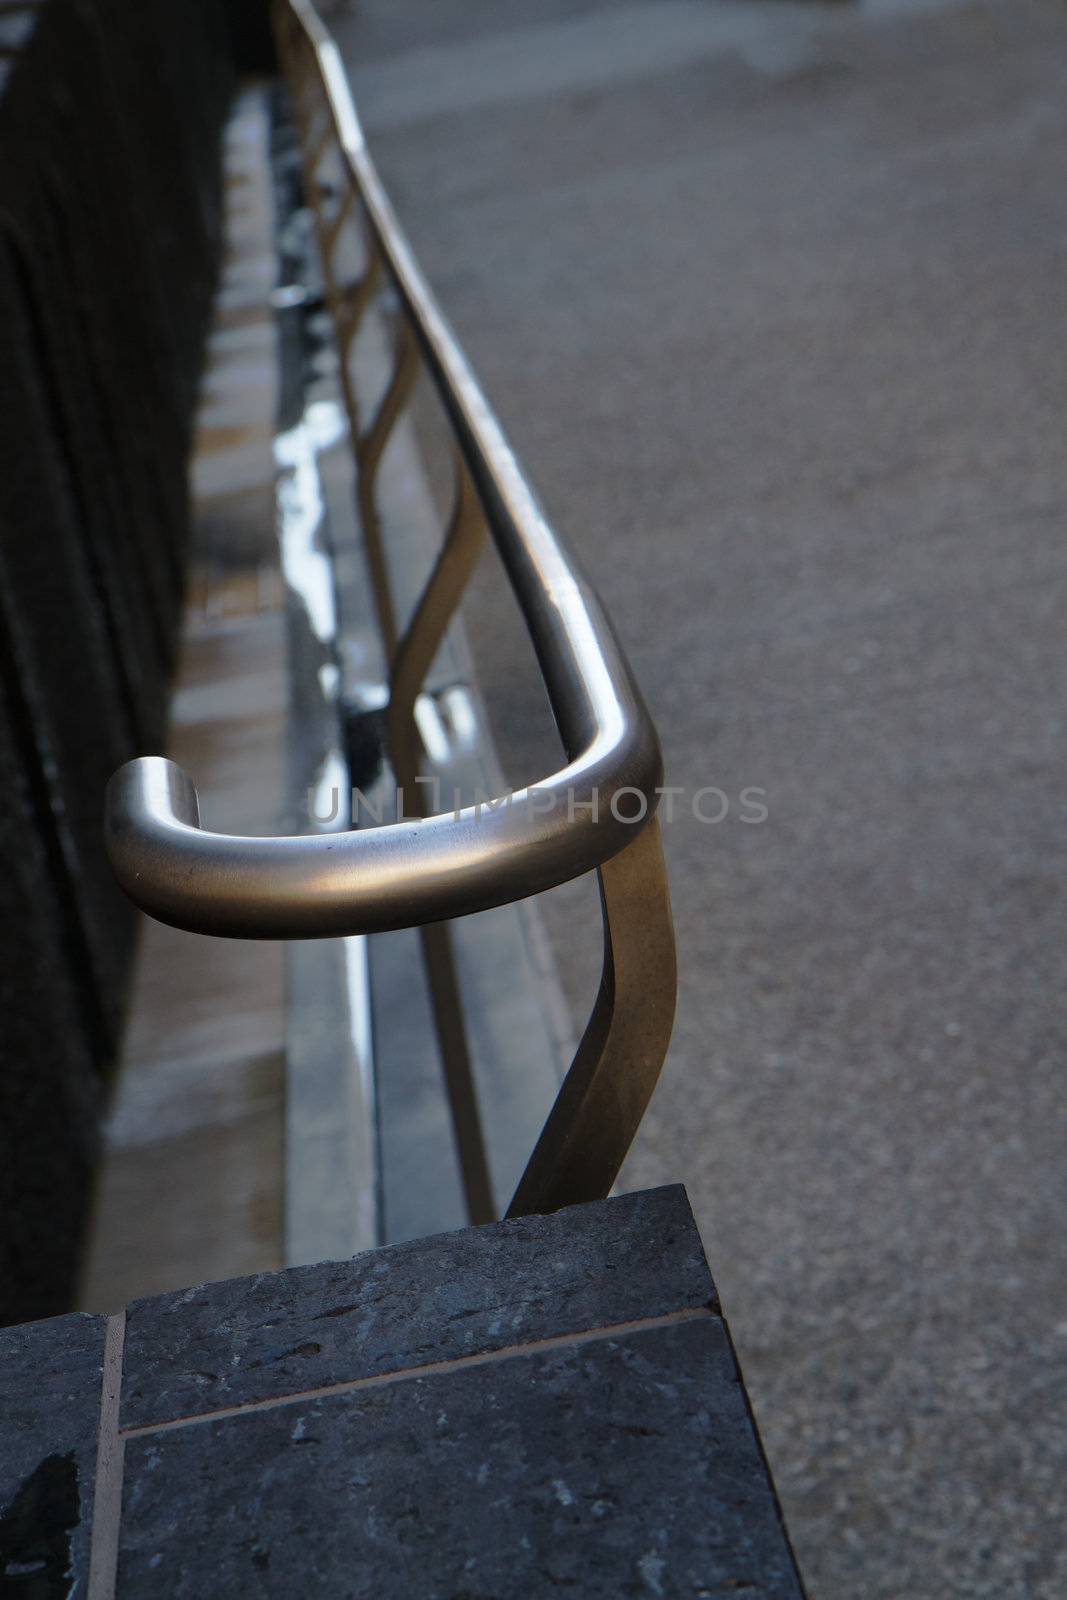 sidewalk railing by bobkeenan